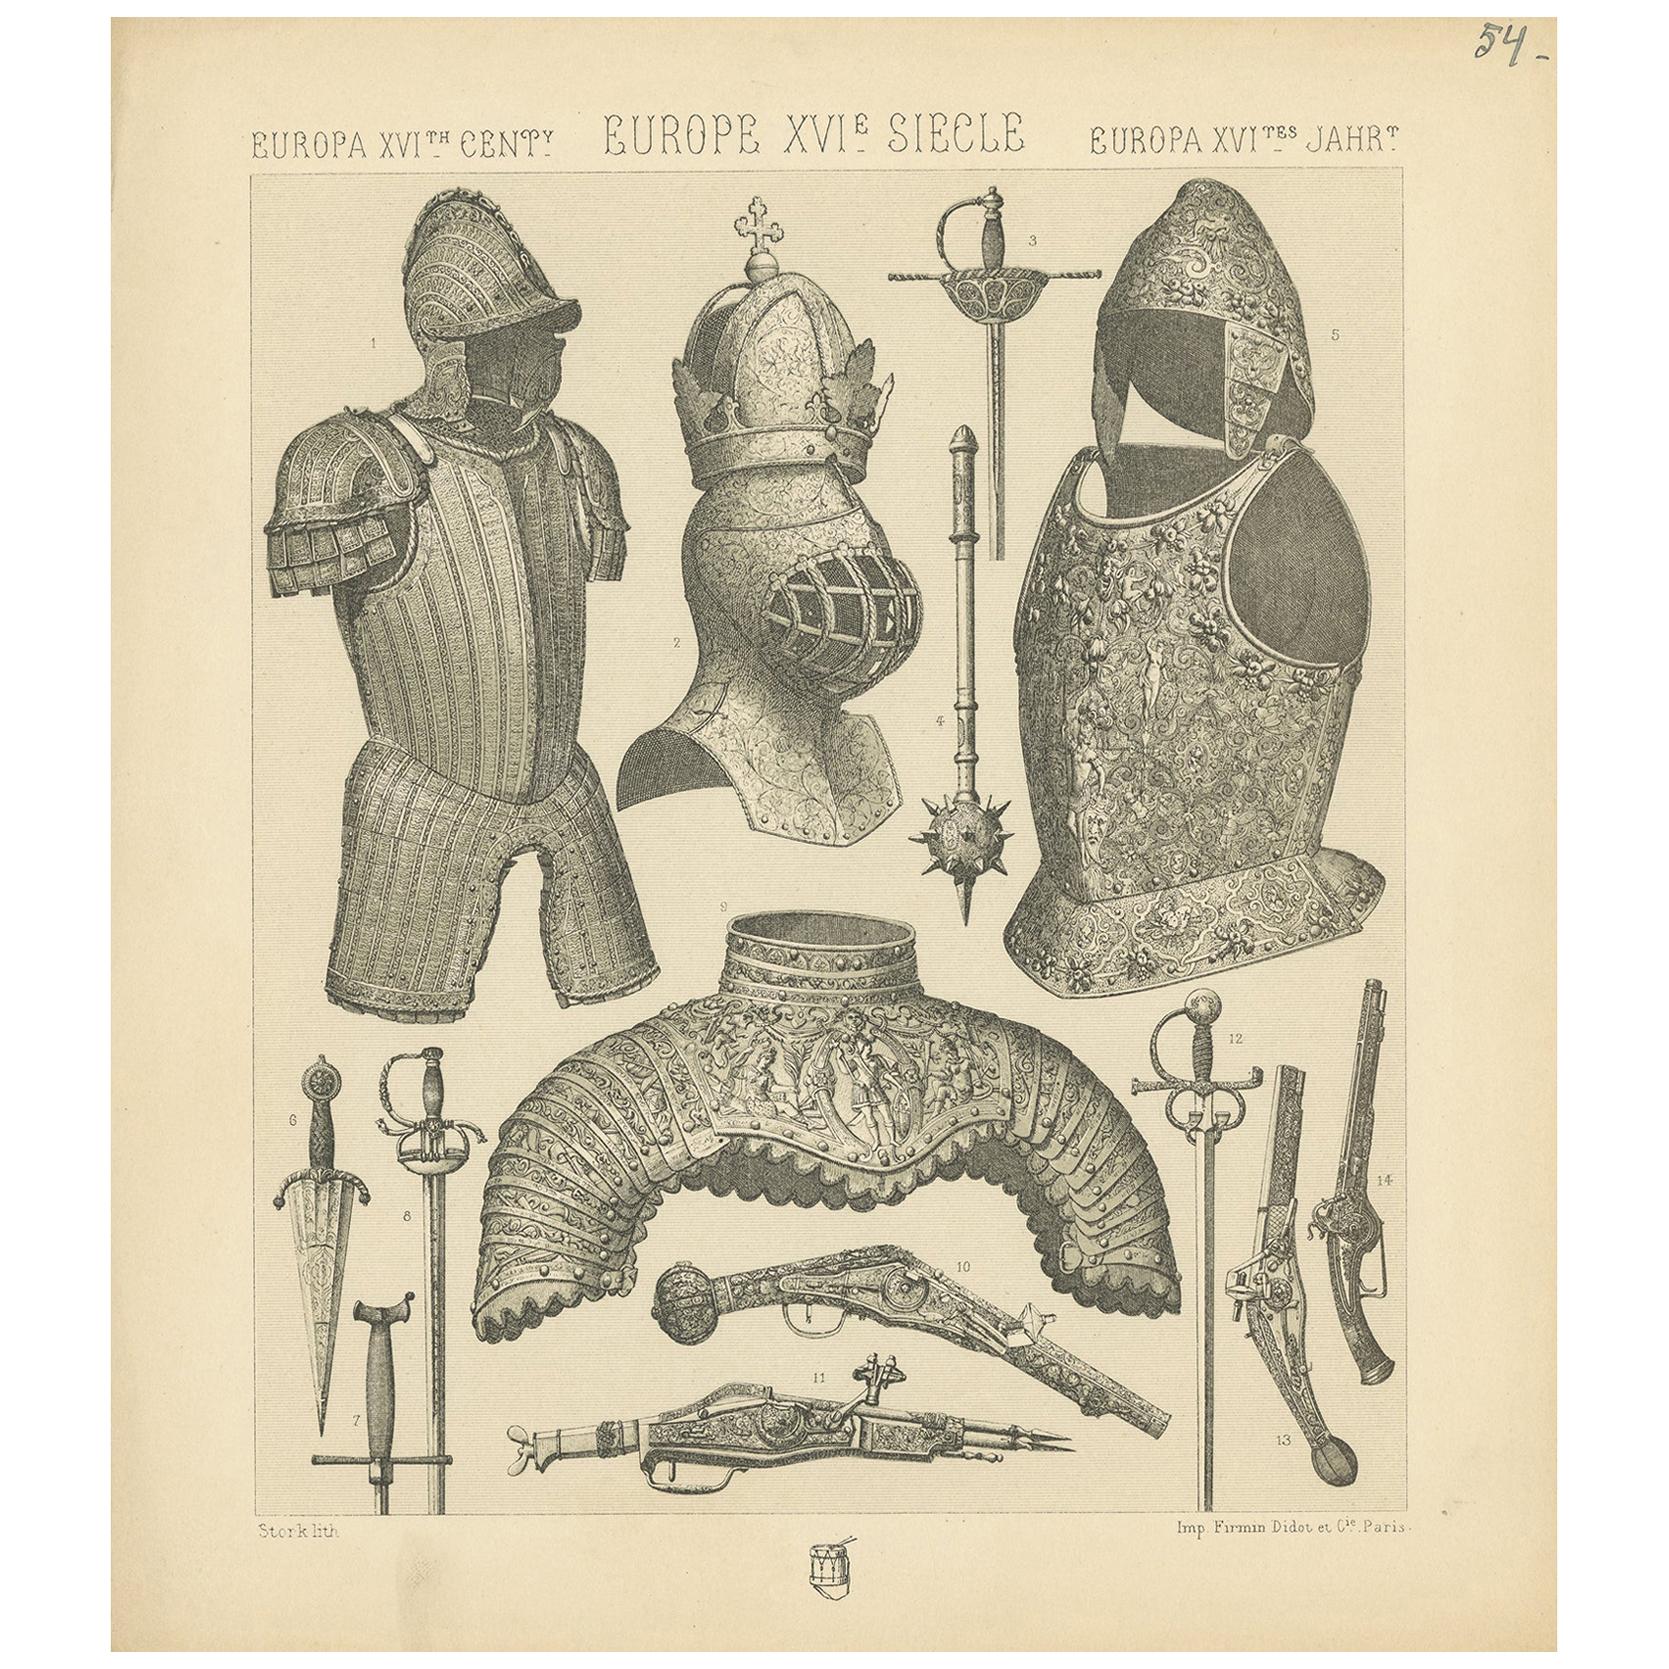 Pl. 54 Antique Print of European 16th Century Armaments by Racinet, circa 1880